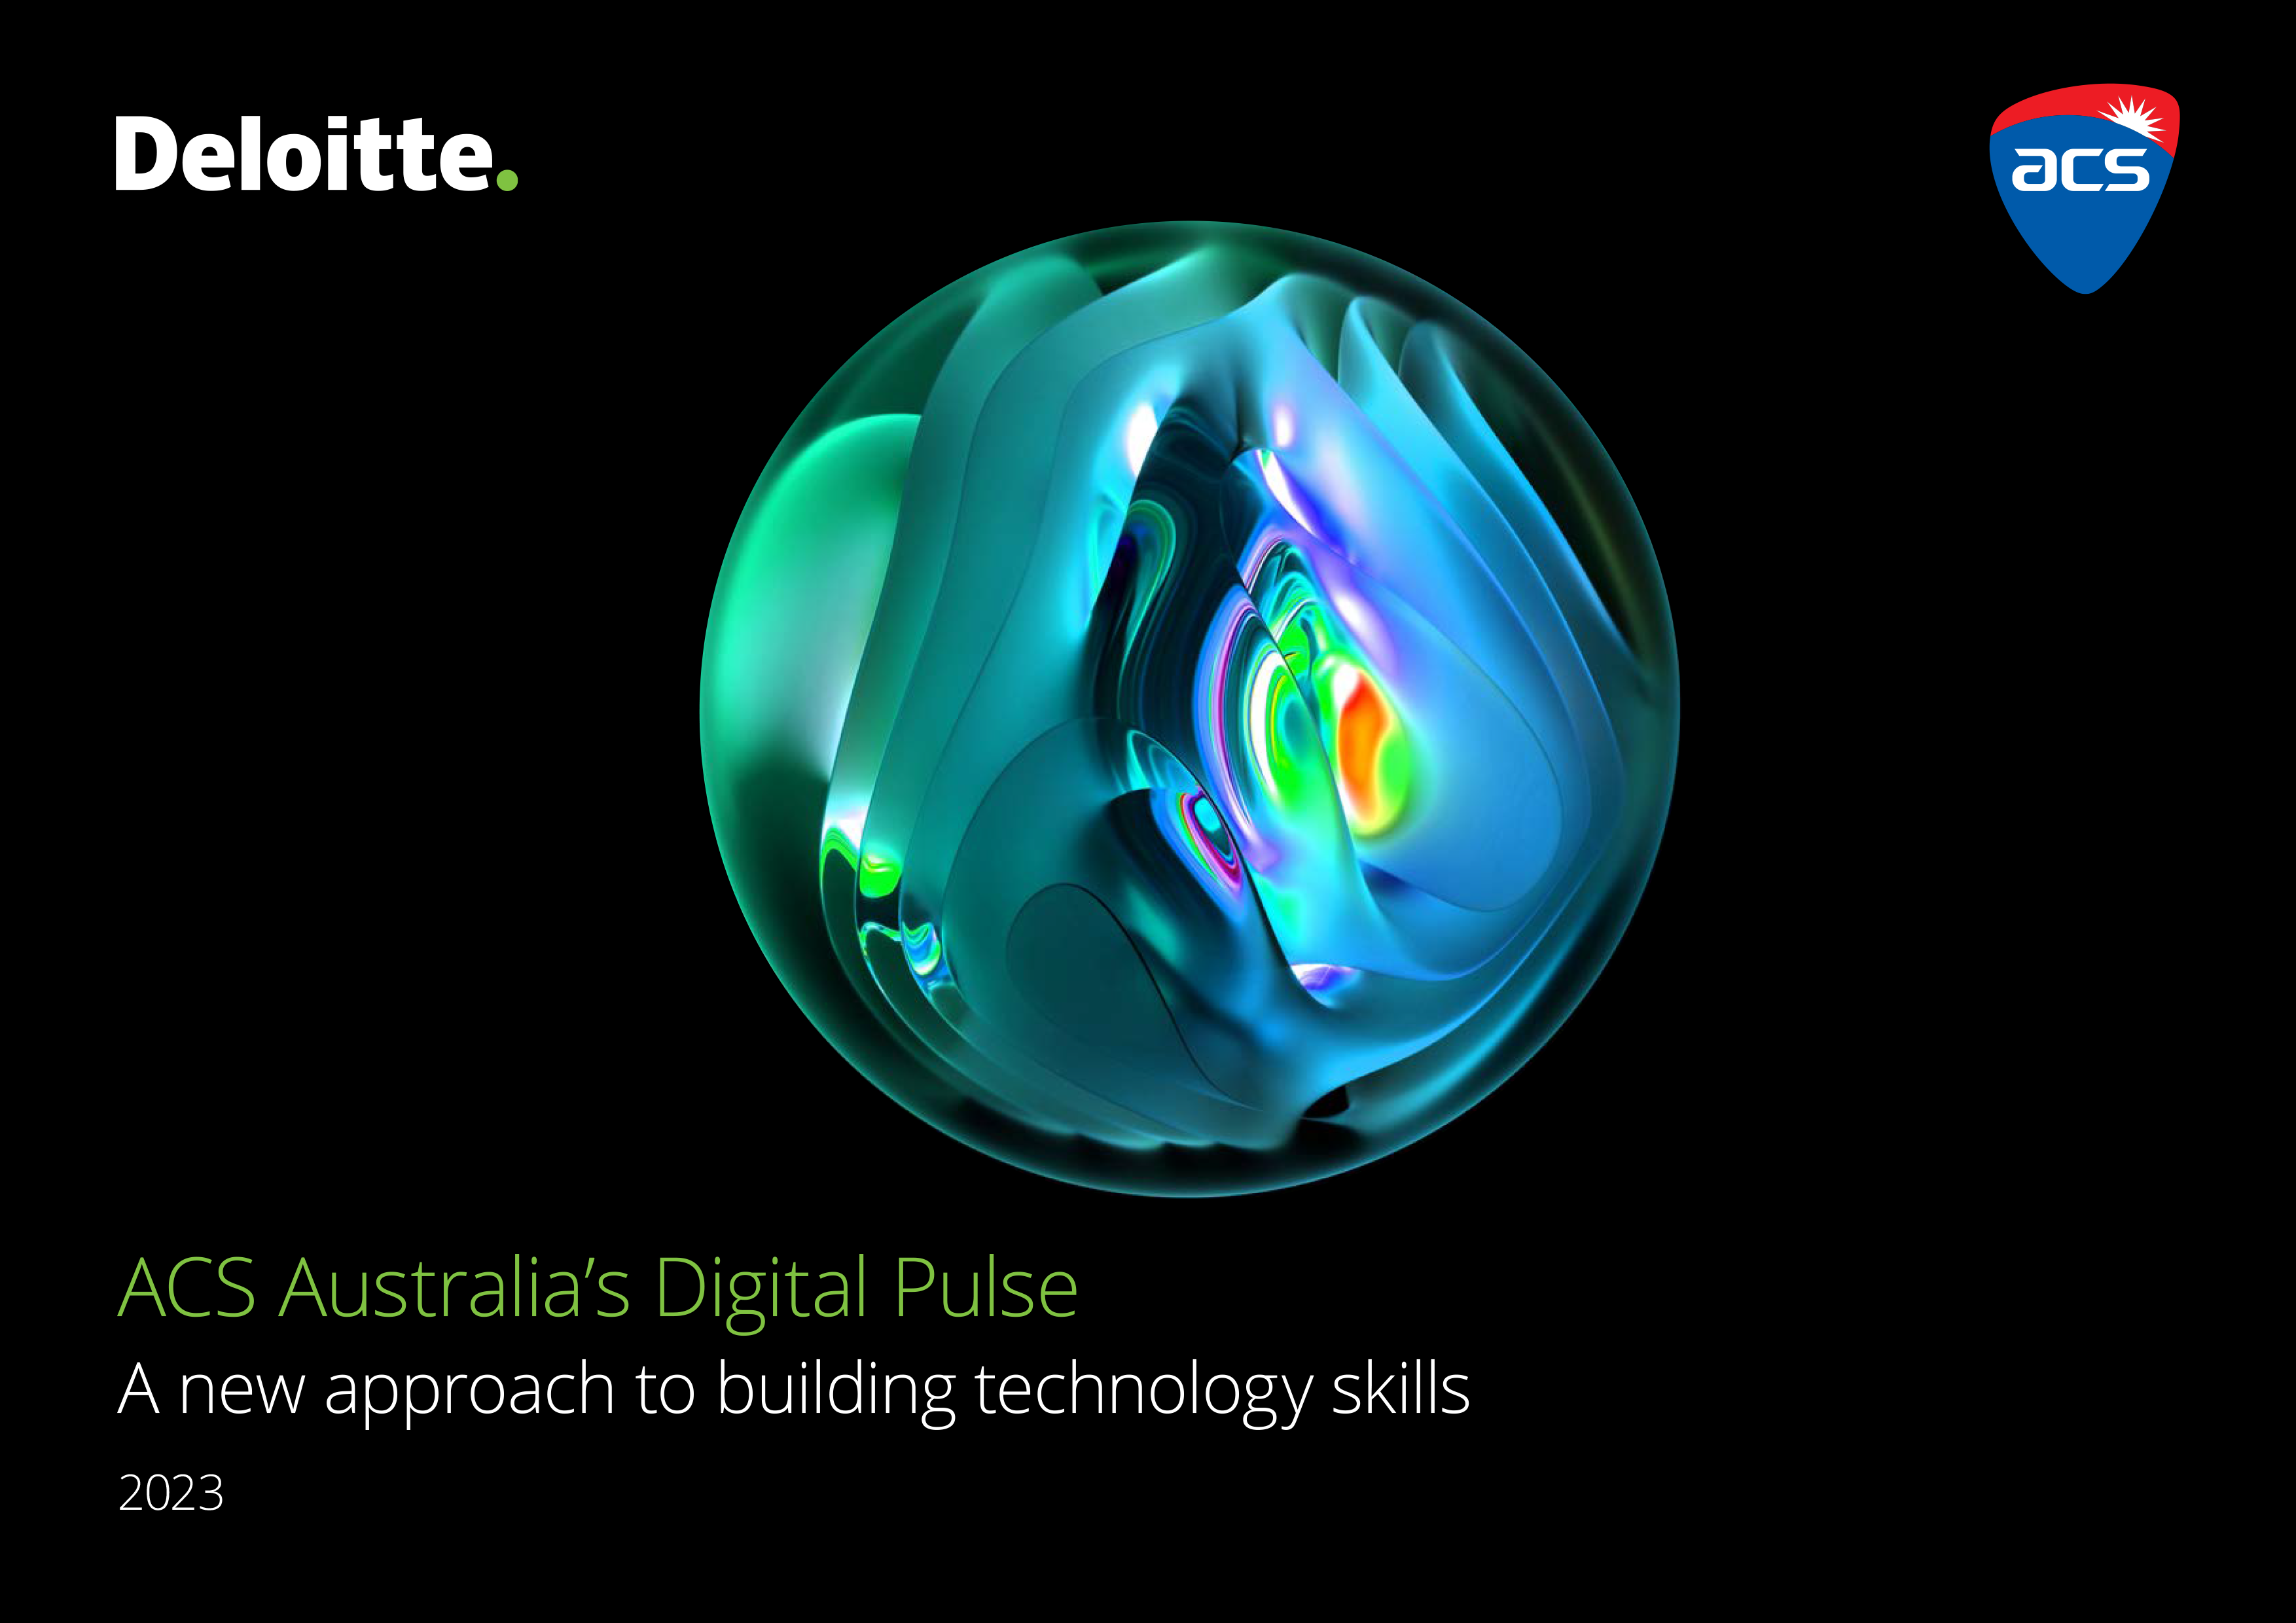 <br />
Australia's Digital Pulse 2023